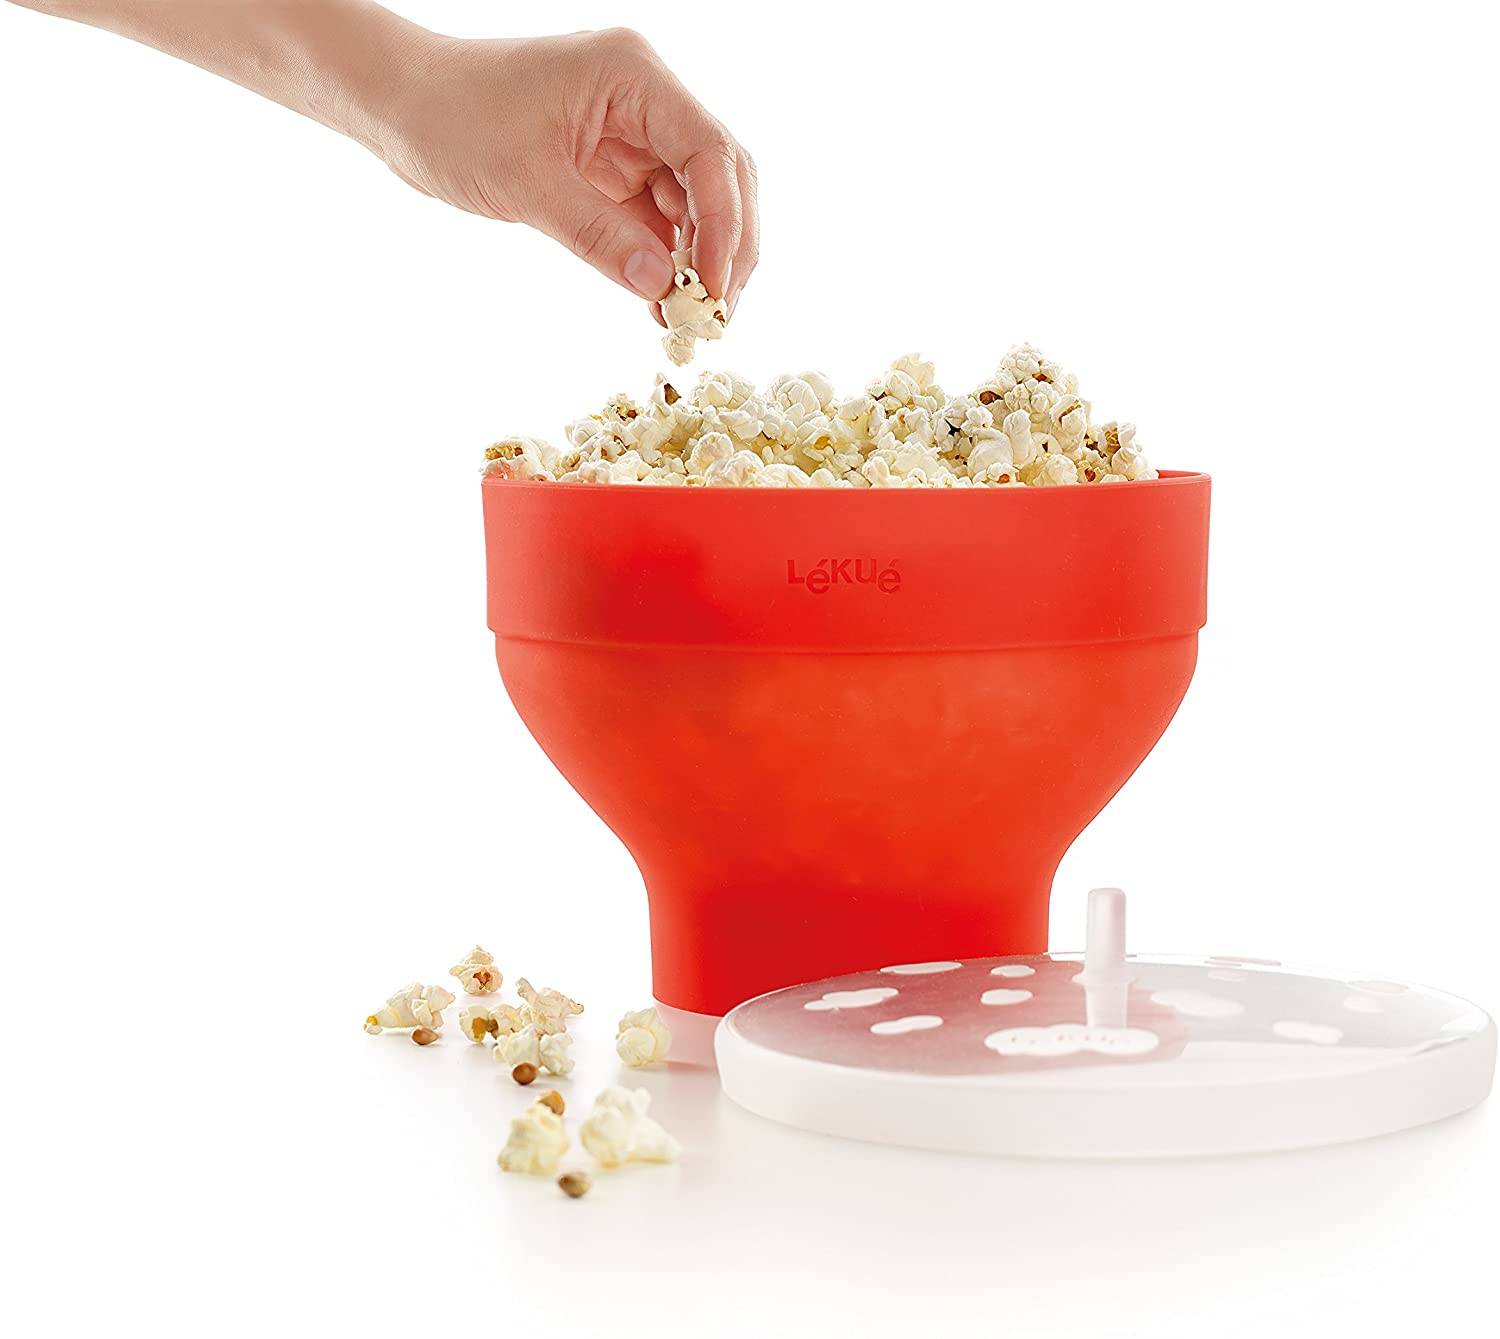 Lekue Microwave Popcorn Popper Review